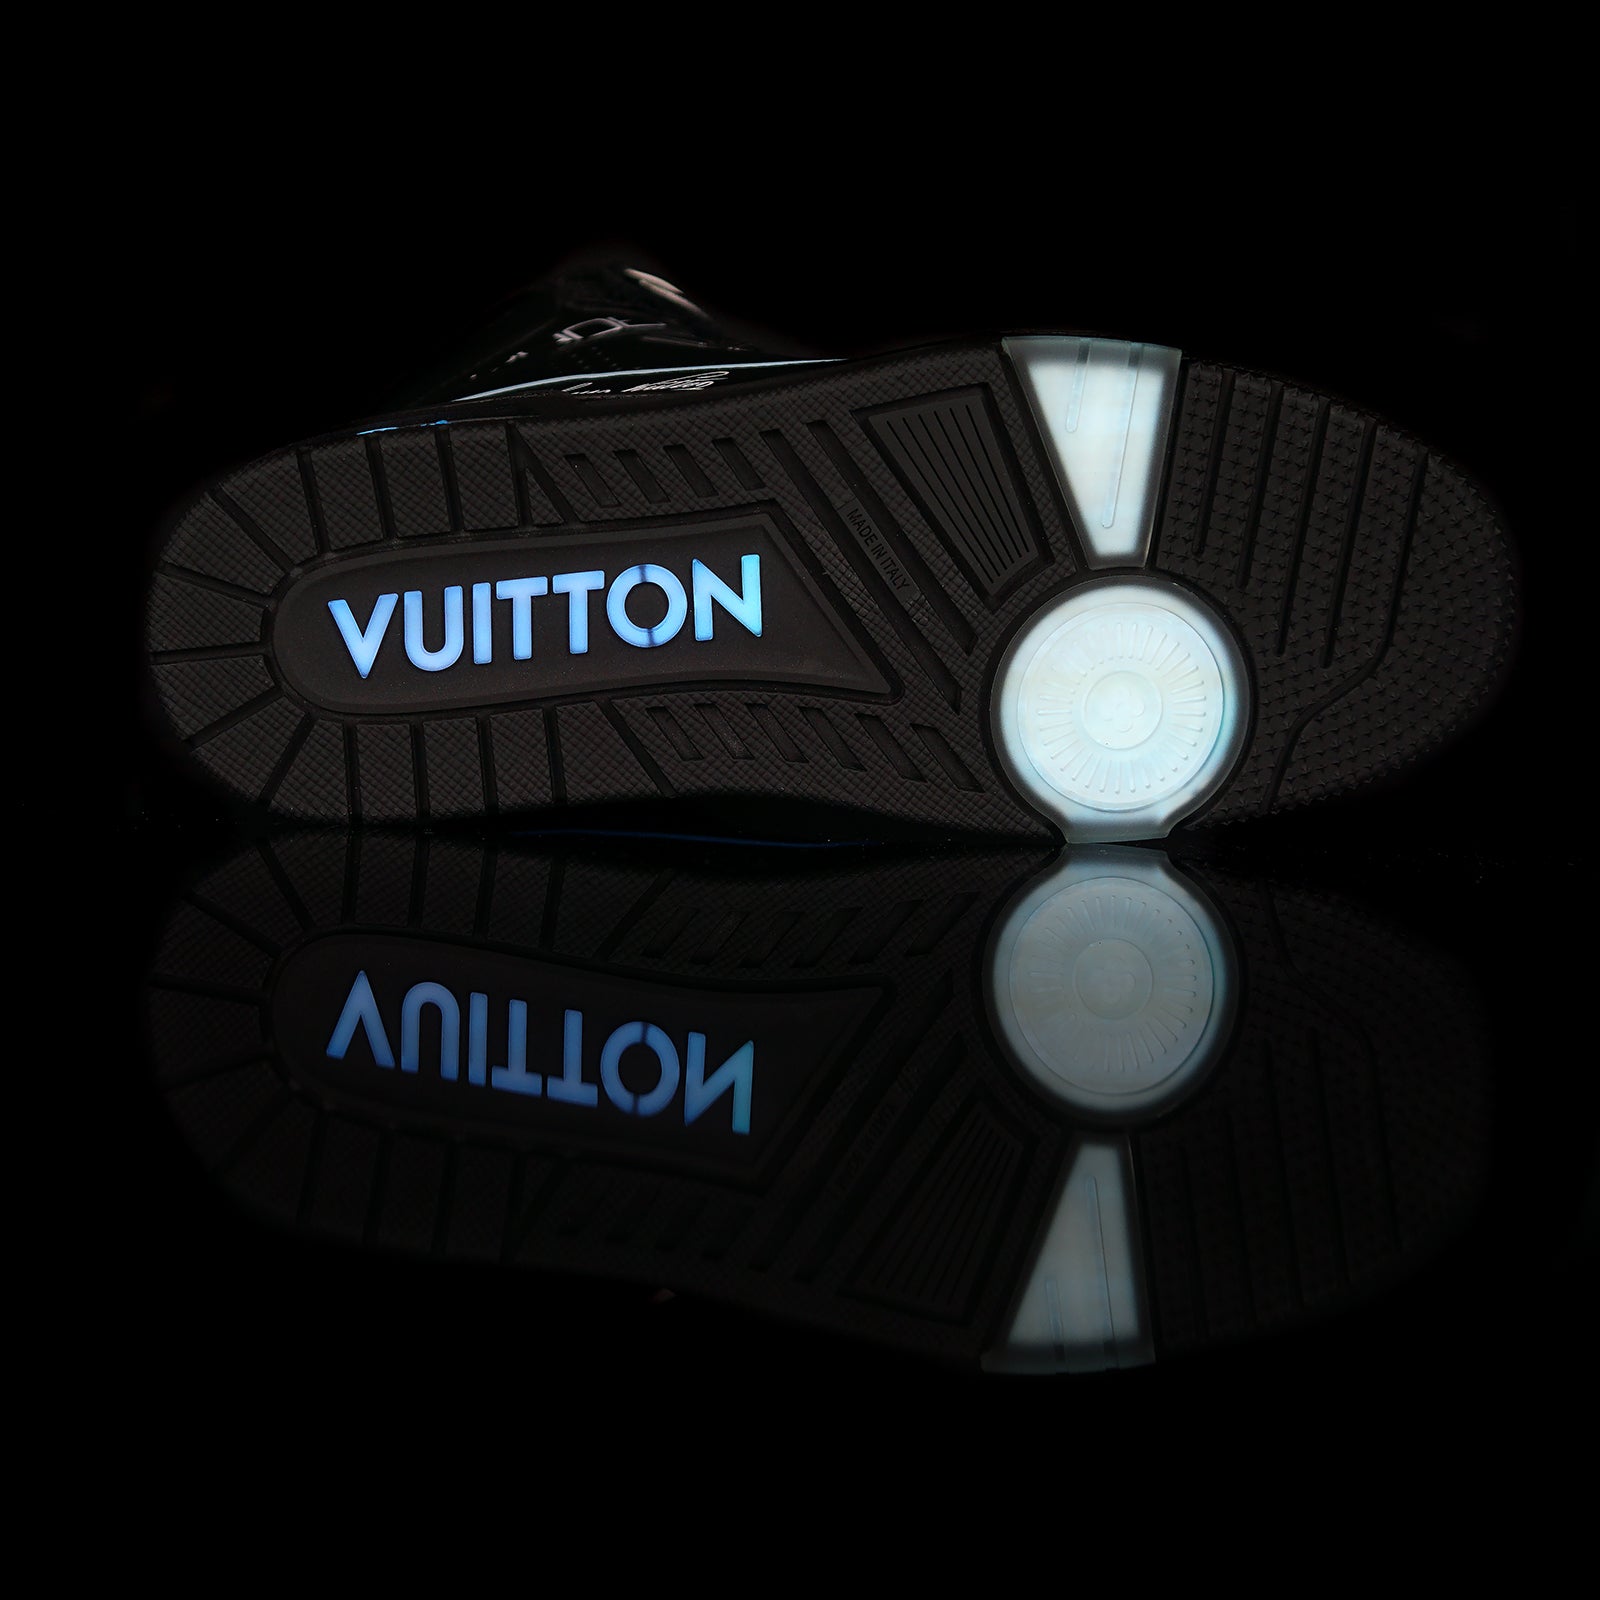 LOUIS VUITTON X408 LED FIBER OPTIC LIGHT UP BLACK SNEAKER SIZE